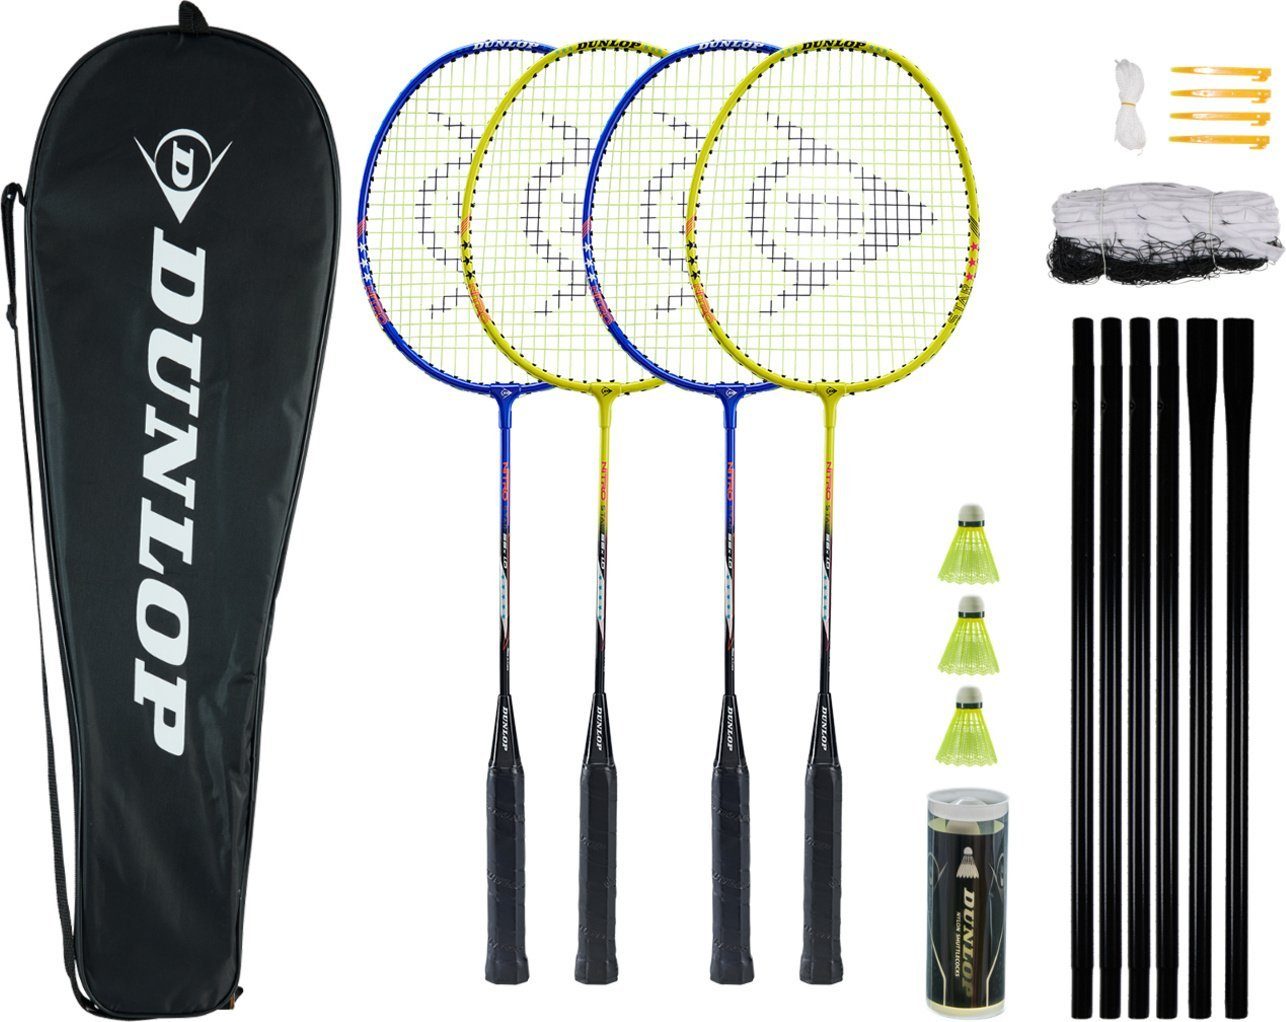 Dunlop Badmintonschläger NITRO-STAR SSx 1.0 4 PLAYER SE BLUE/YELLOW/RED/BLACK